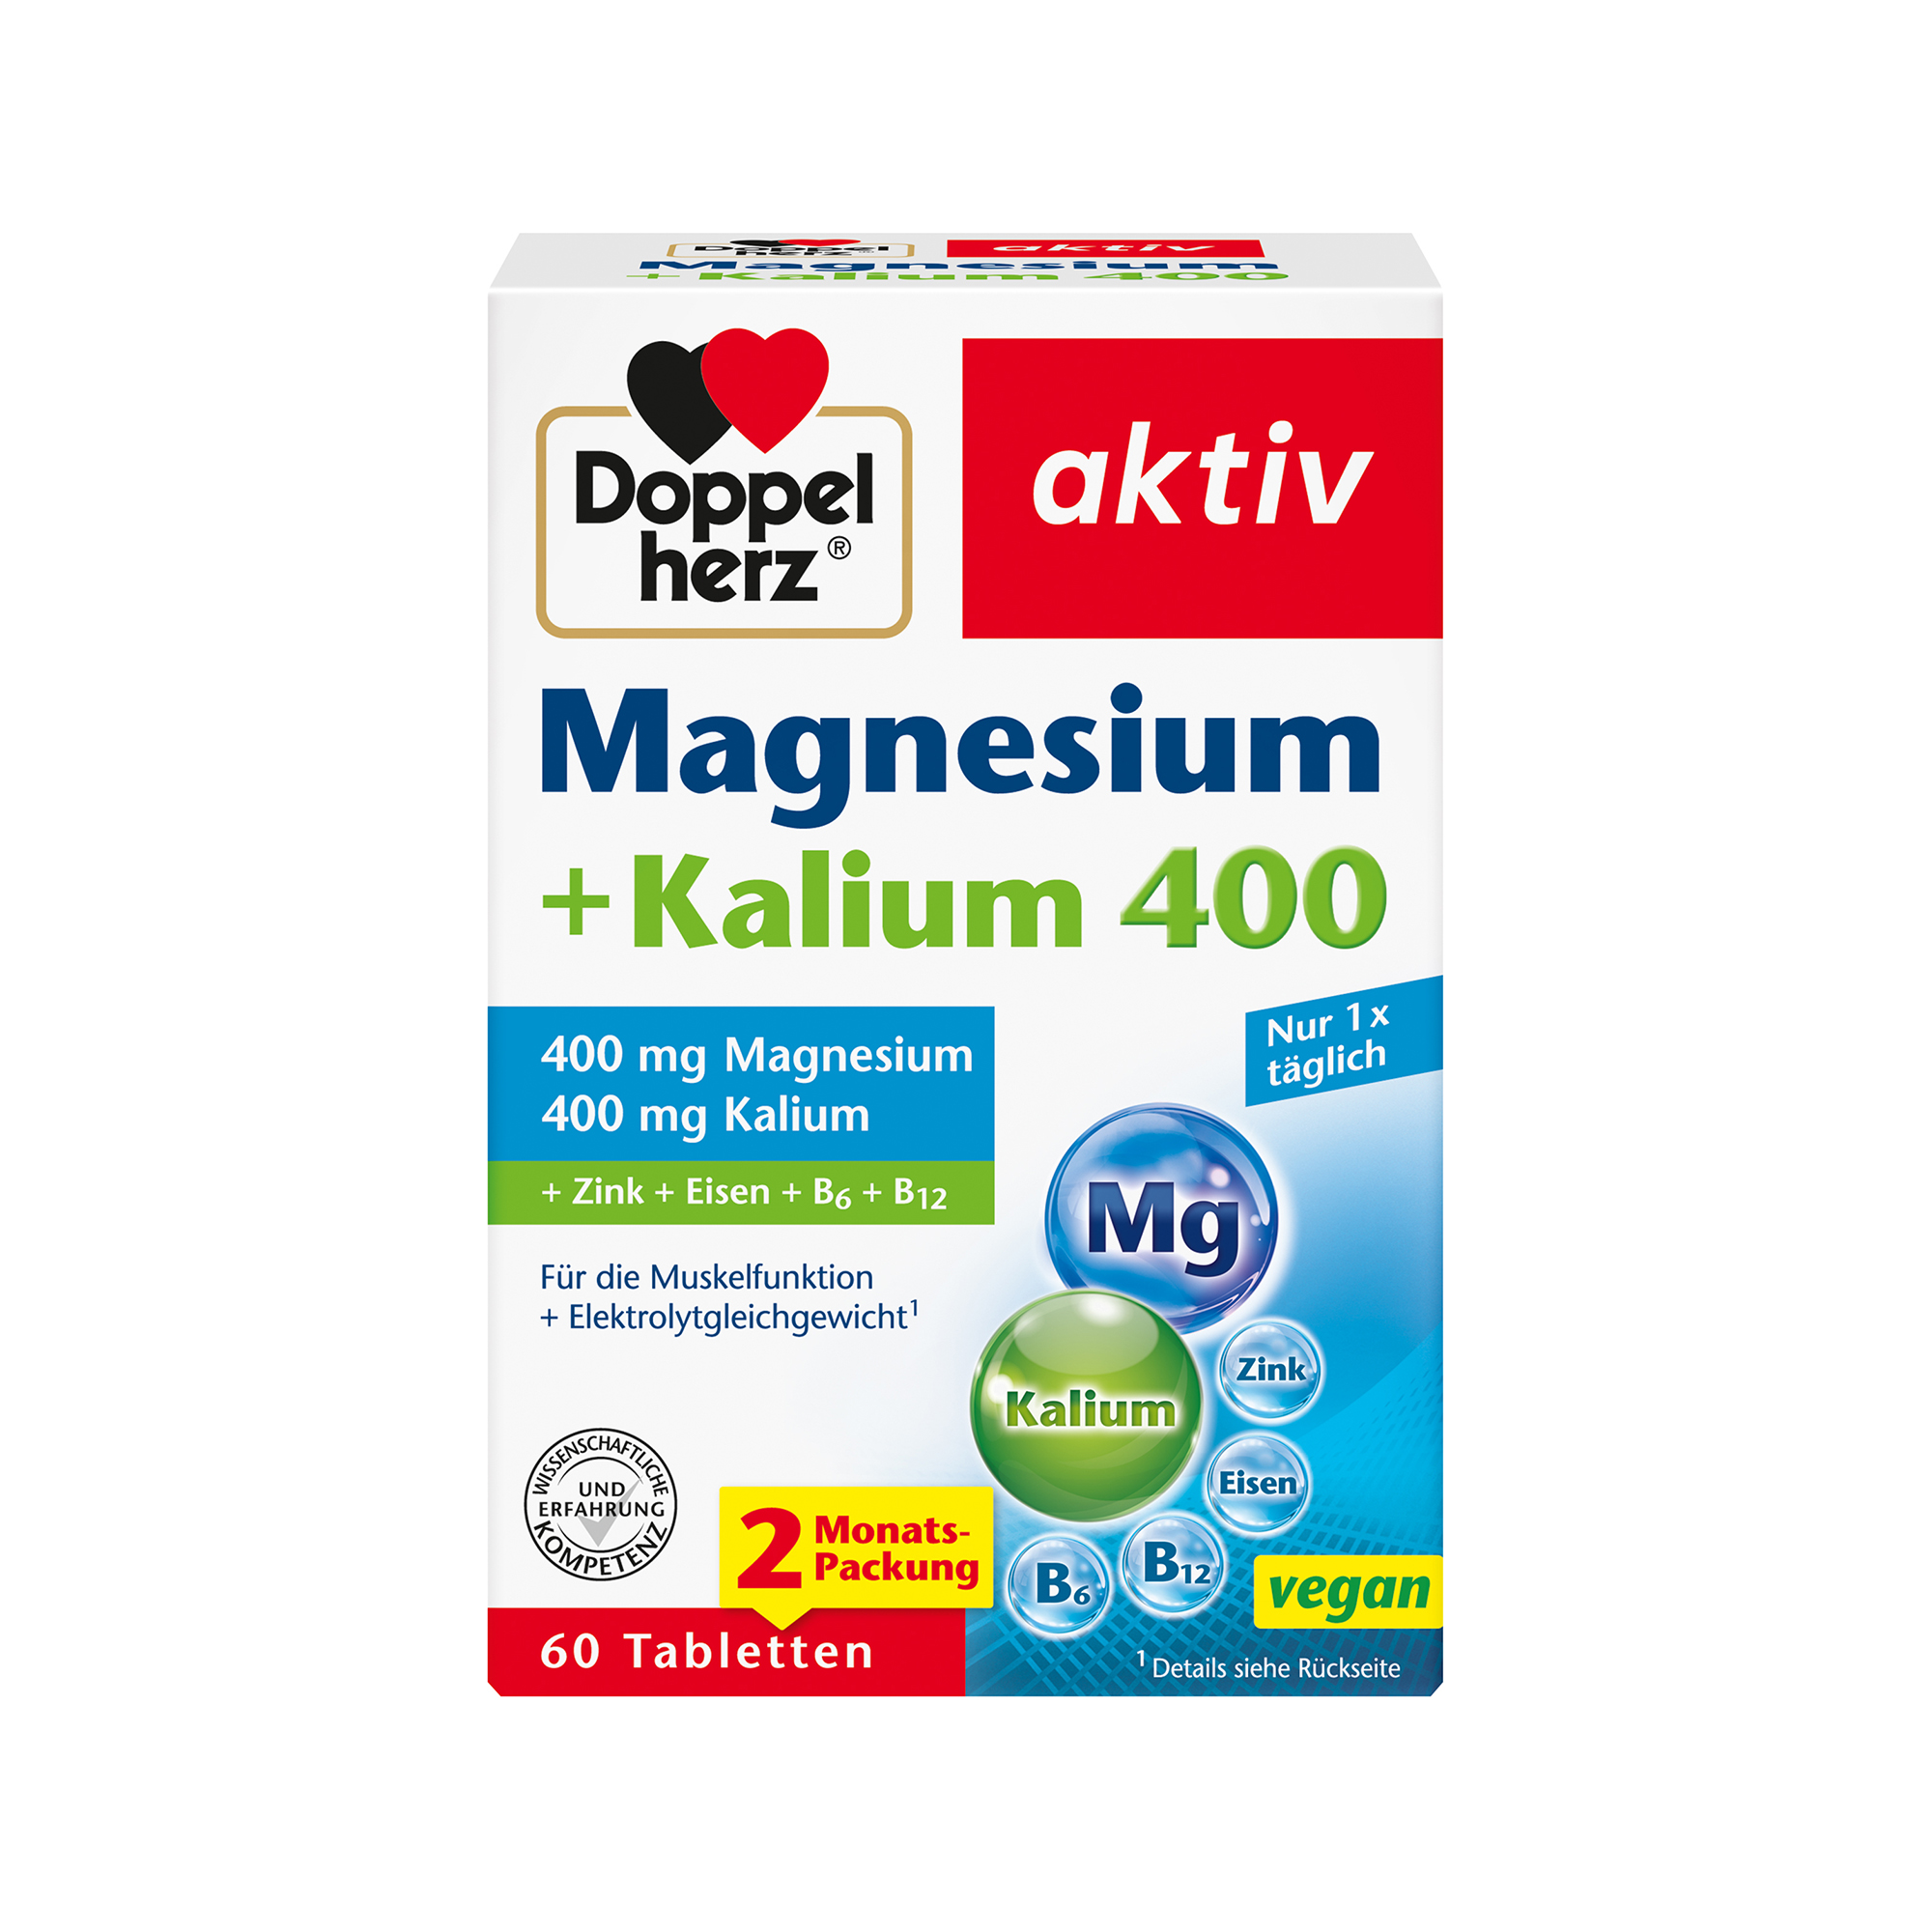 Doppelherz aktiv Magnesium 400 + Potassium, 60 Tablets